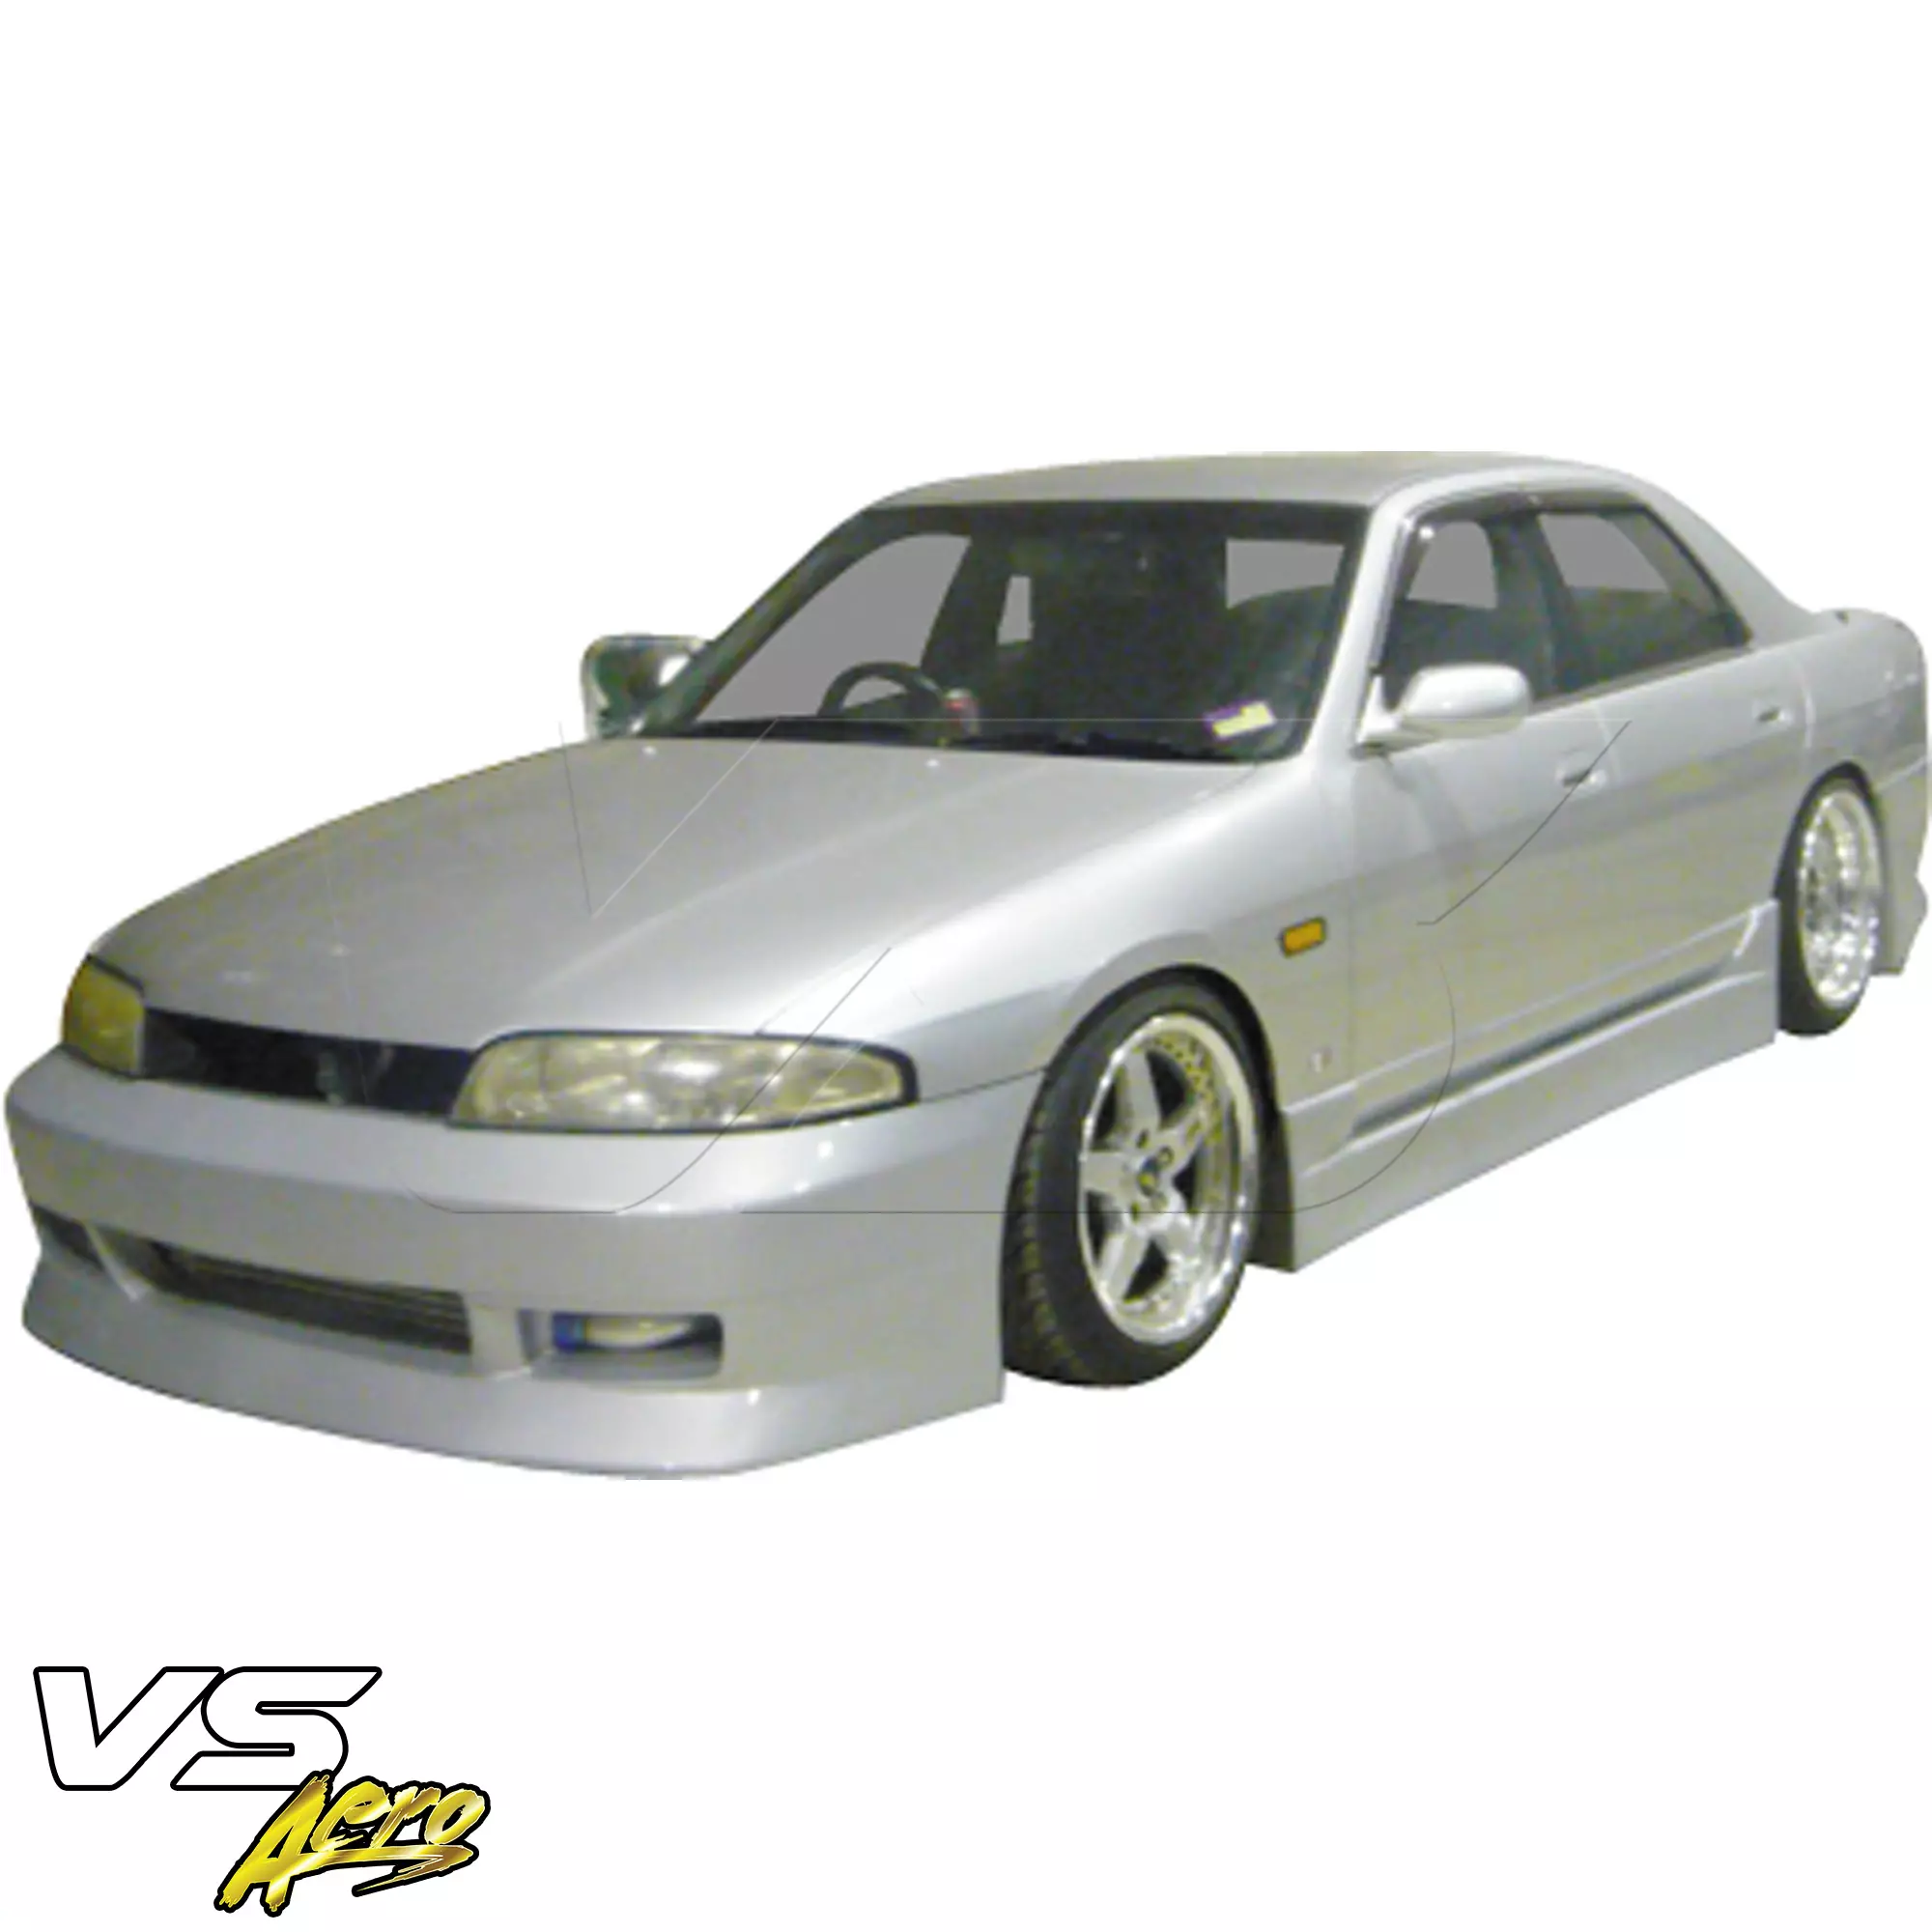 VSaero FRP FKON Body Kit 4pc > Nissan Skyline R33 GTS 1995-1998 > 4dr Sedan - Image 26